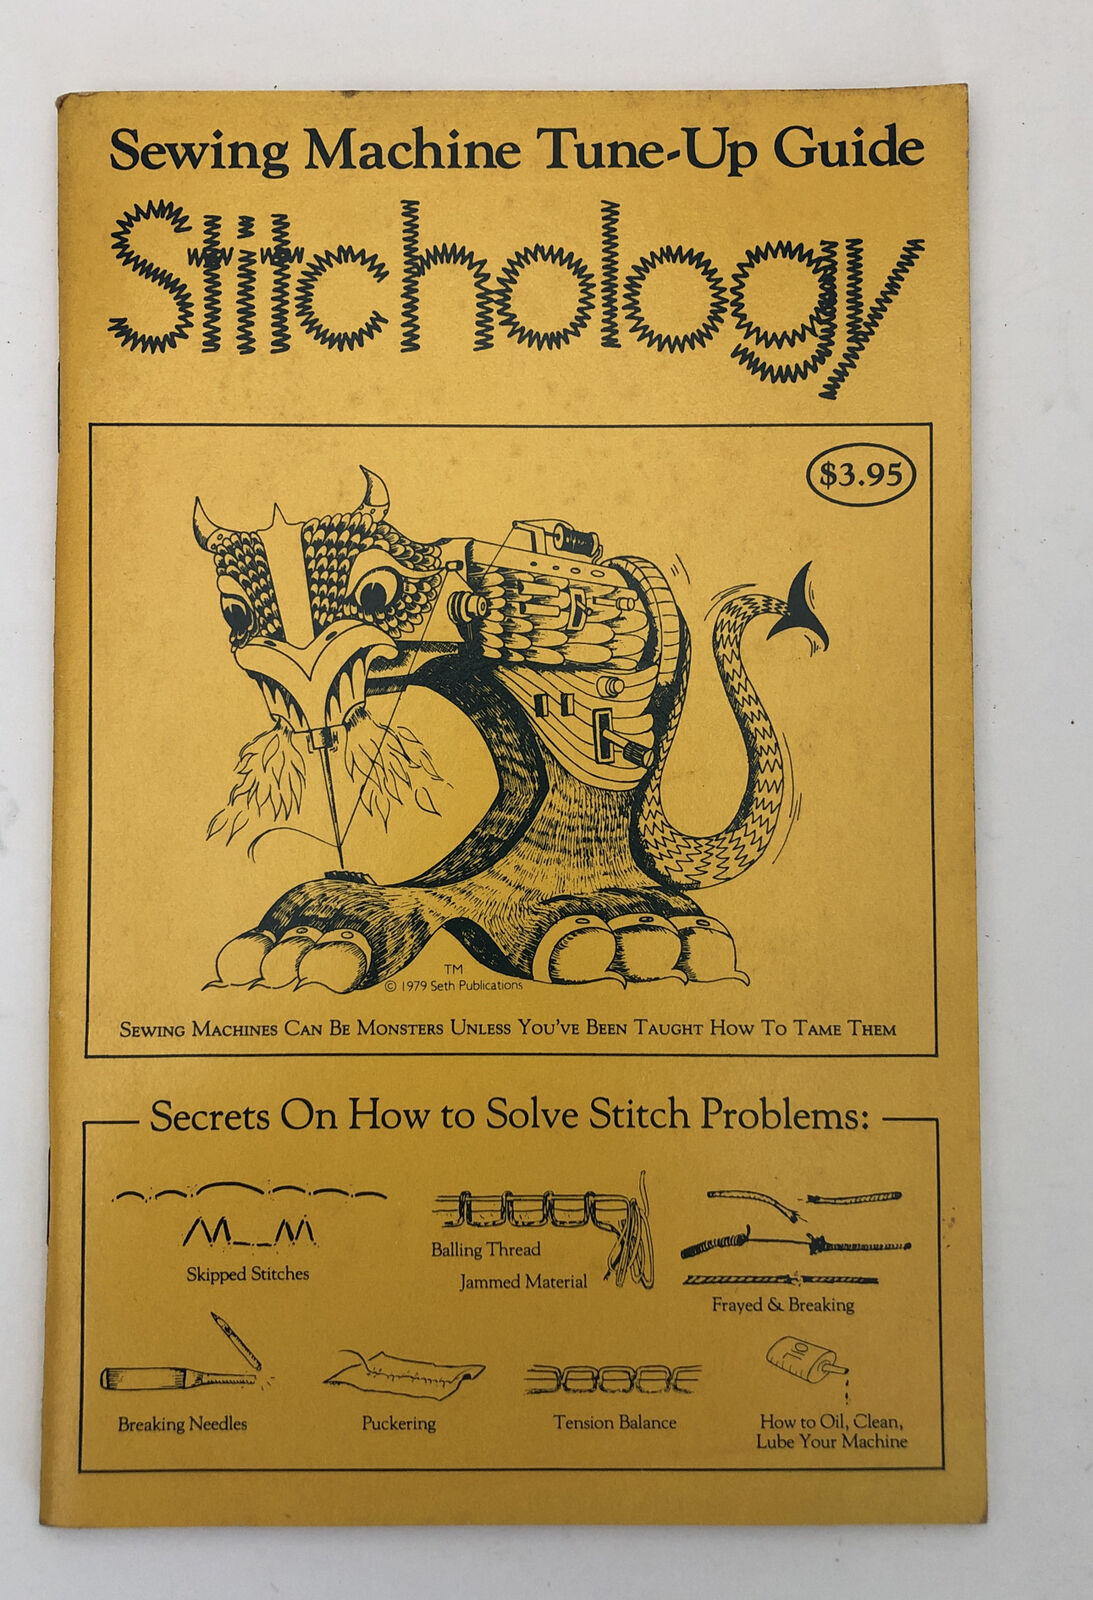 Rare Vintage Sewing Machine Book "stitchology" By Douglas Neil Skjerseth 1979